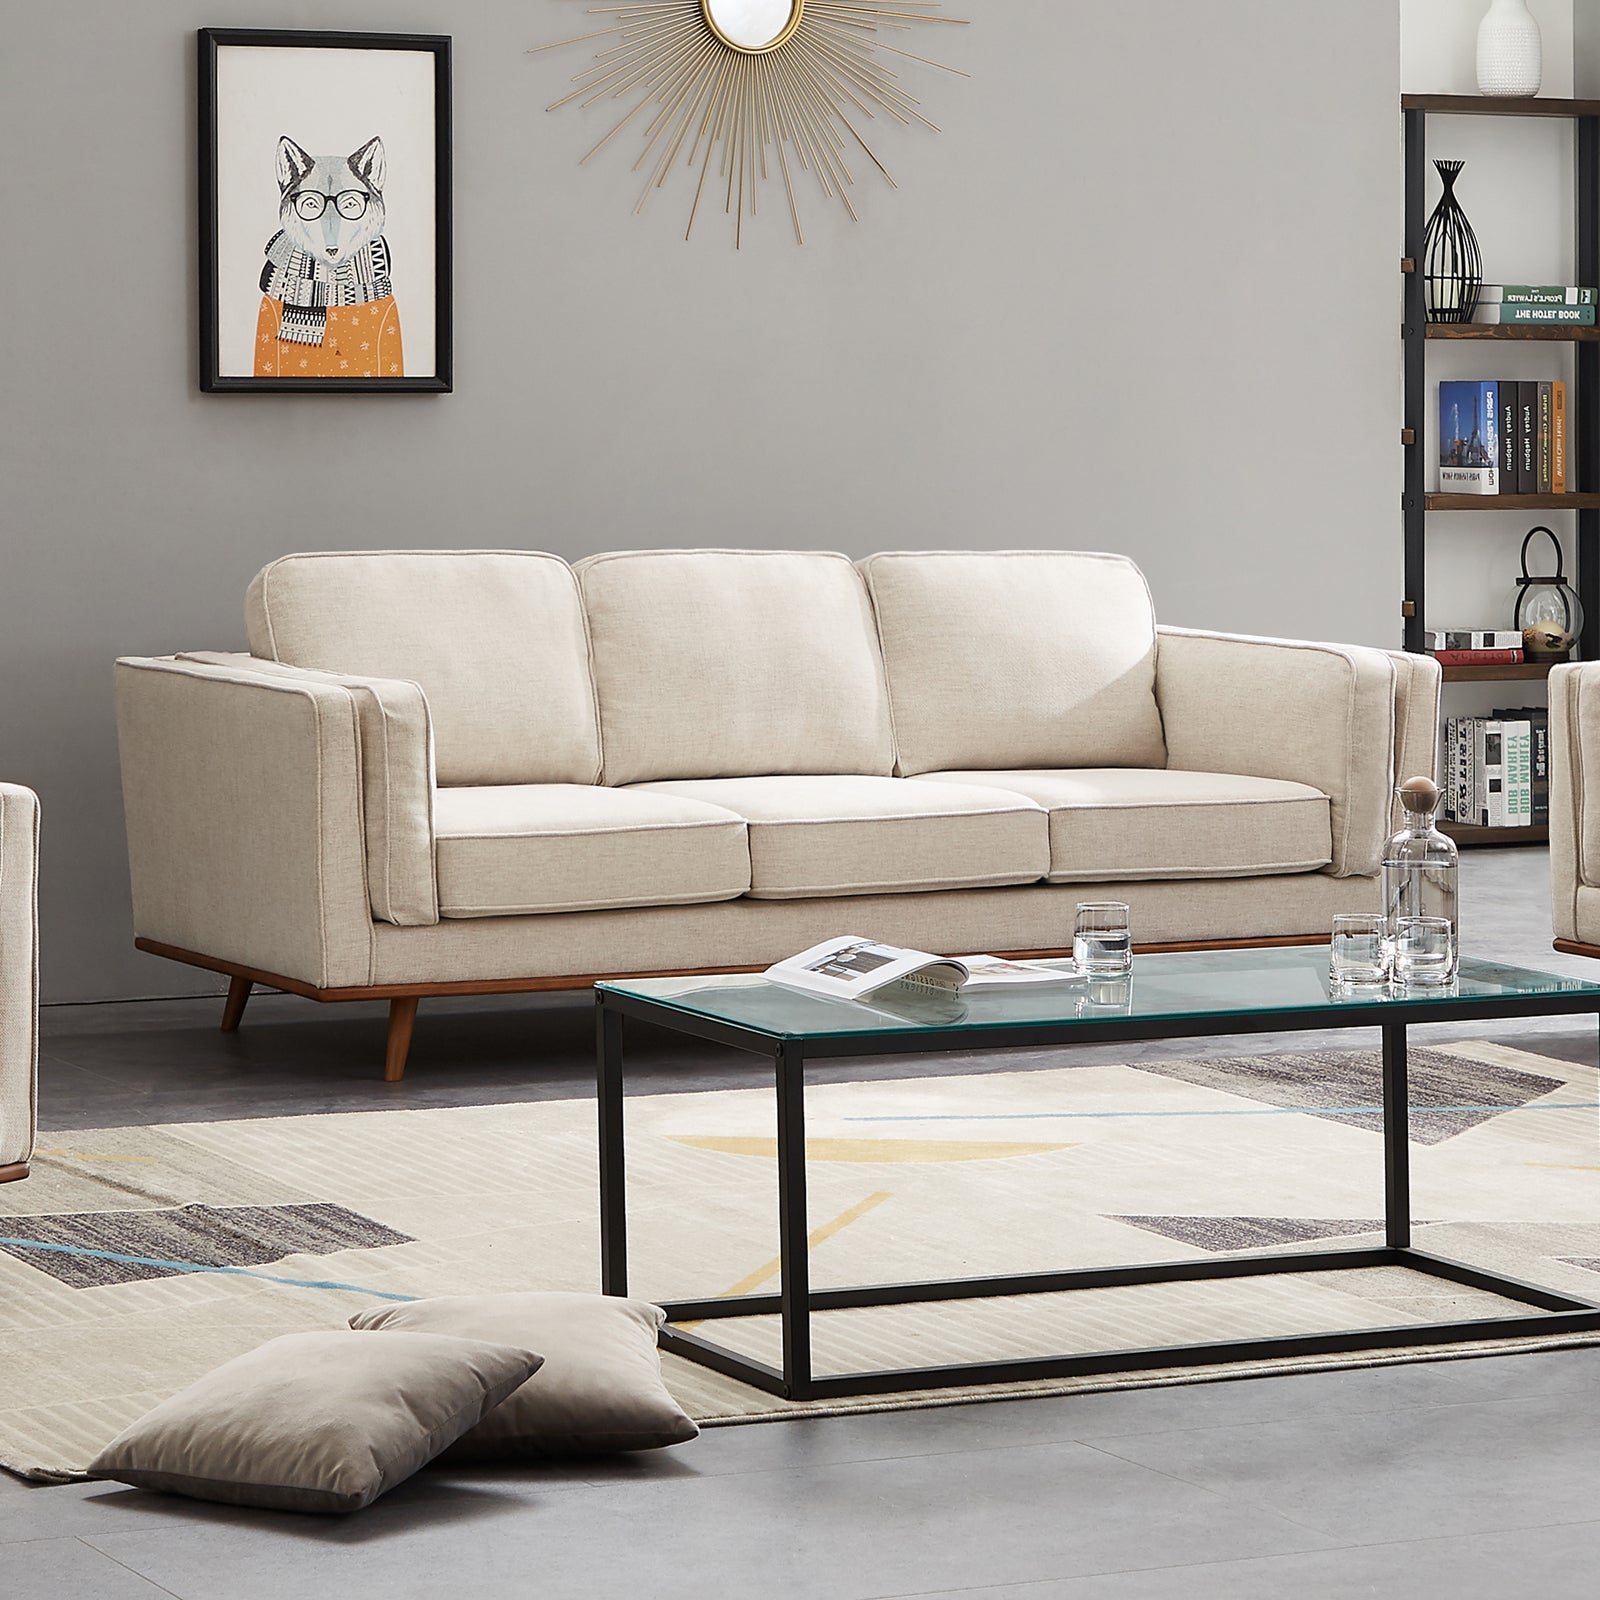 York 3 Seater Fabric Armchair Sofa Modern Lounge in Beige Colour